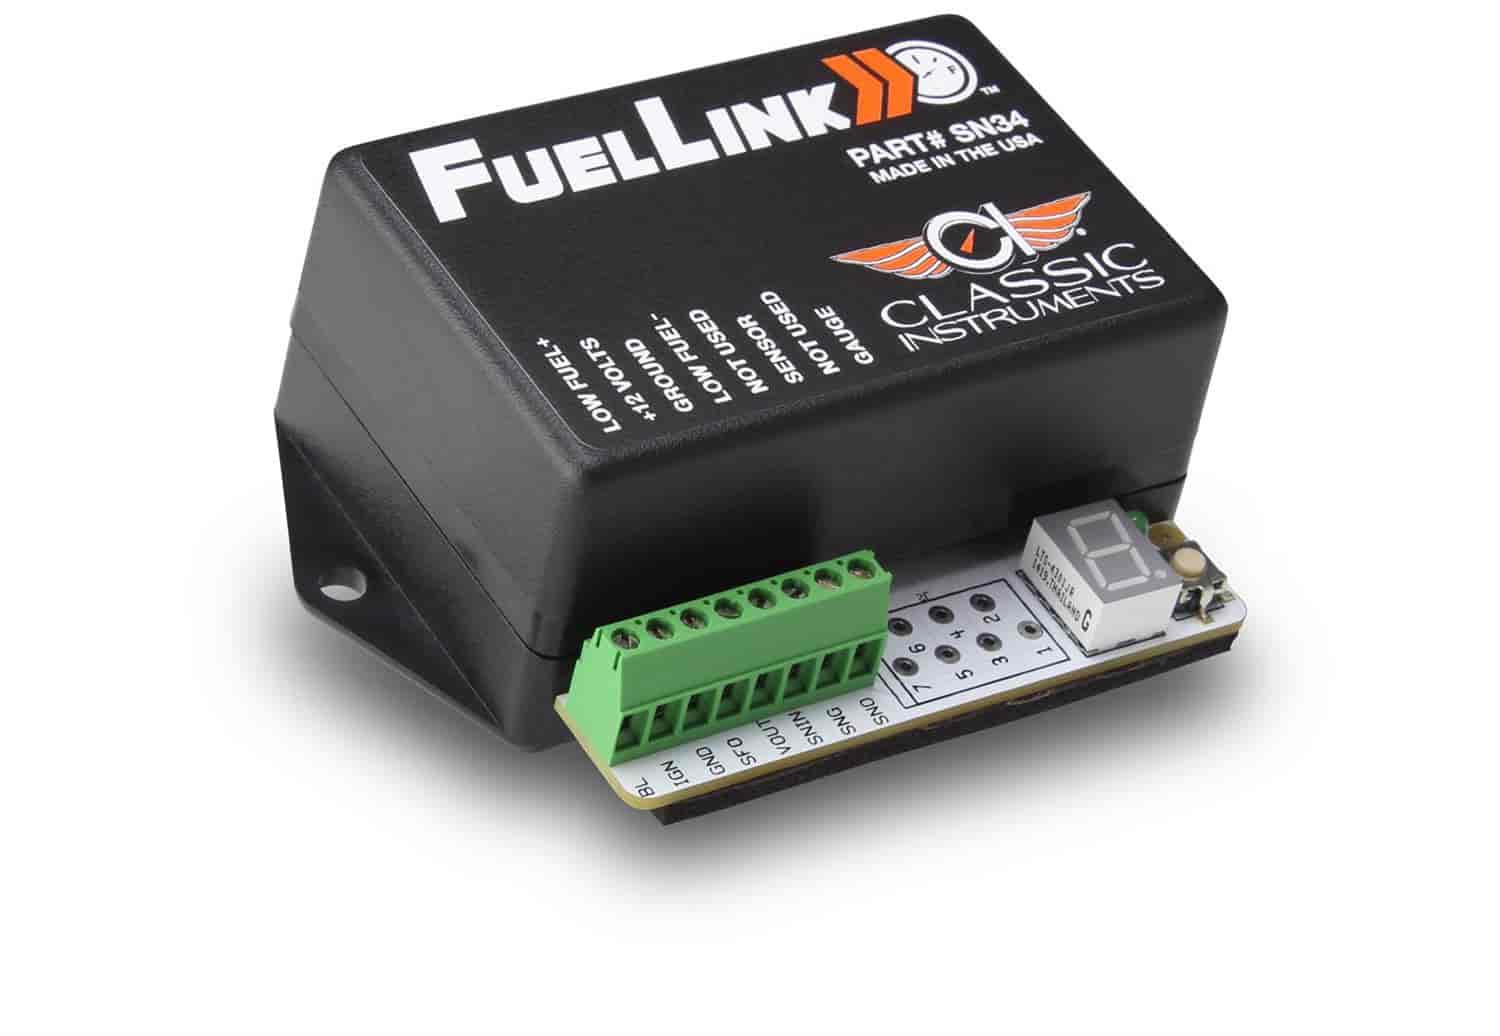 FuelLink Fuel Interface 3" x 2" x 1.5"